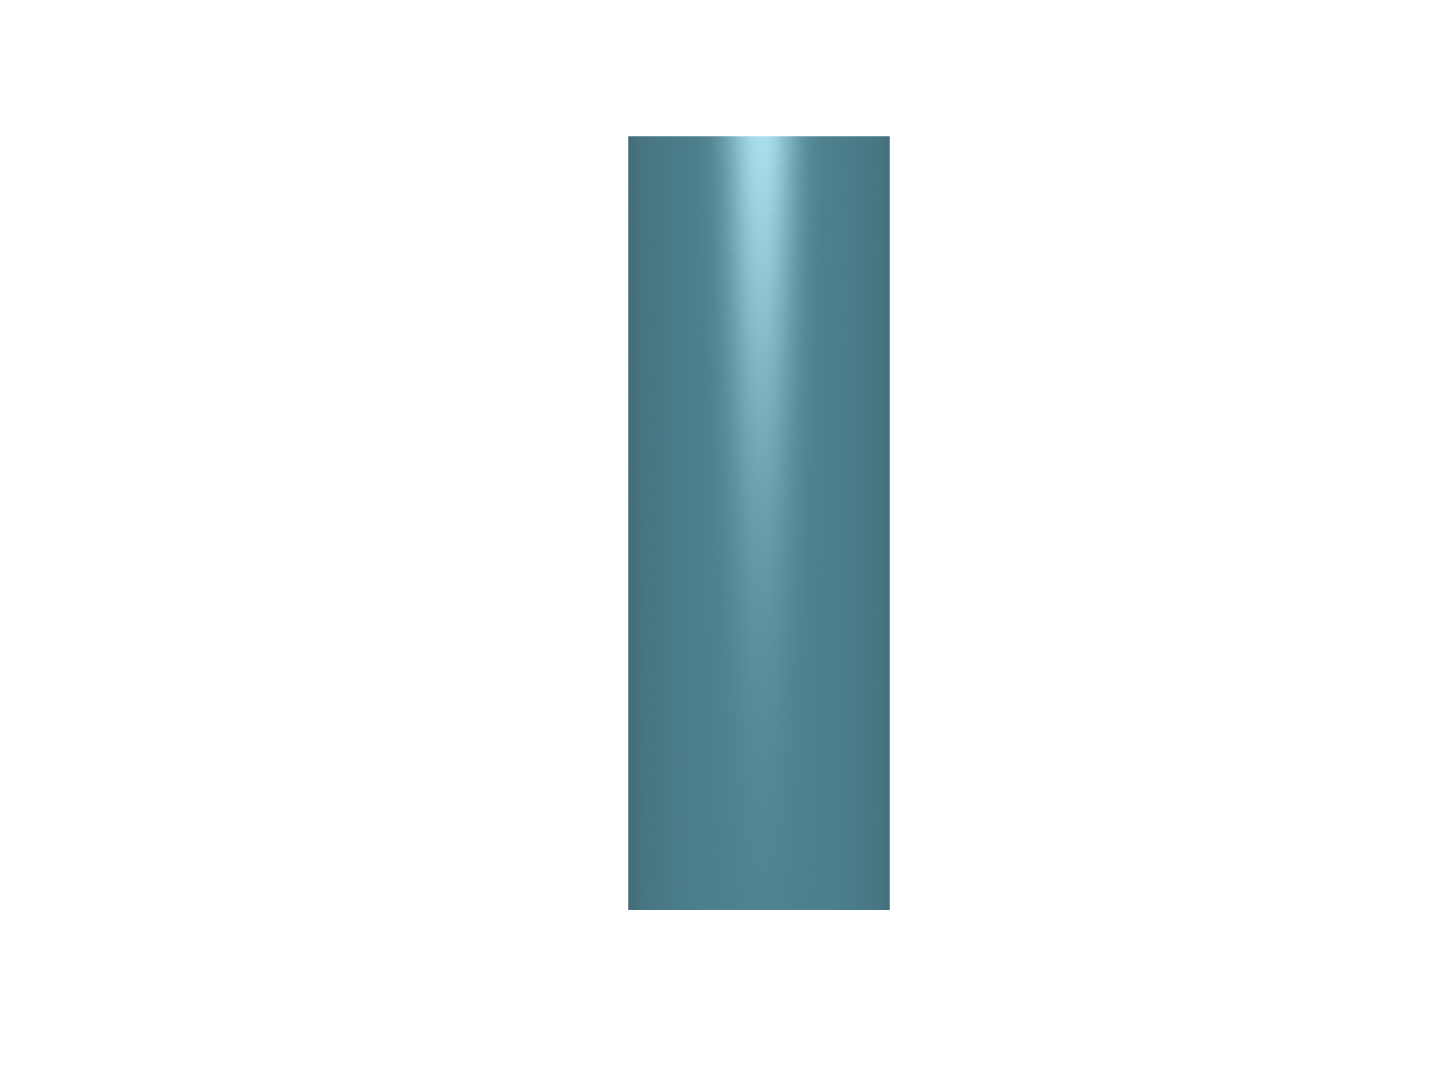 flow past a circular cylinder image